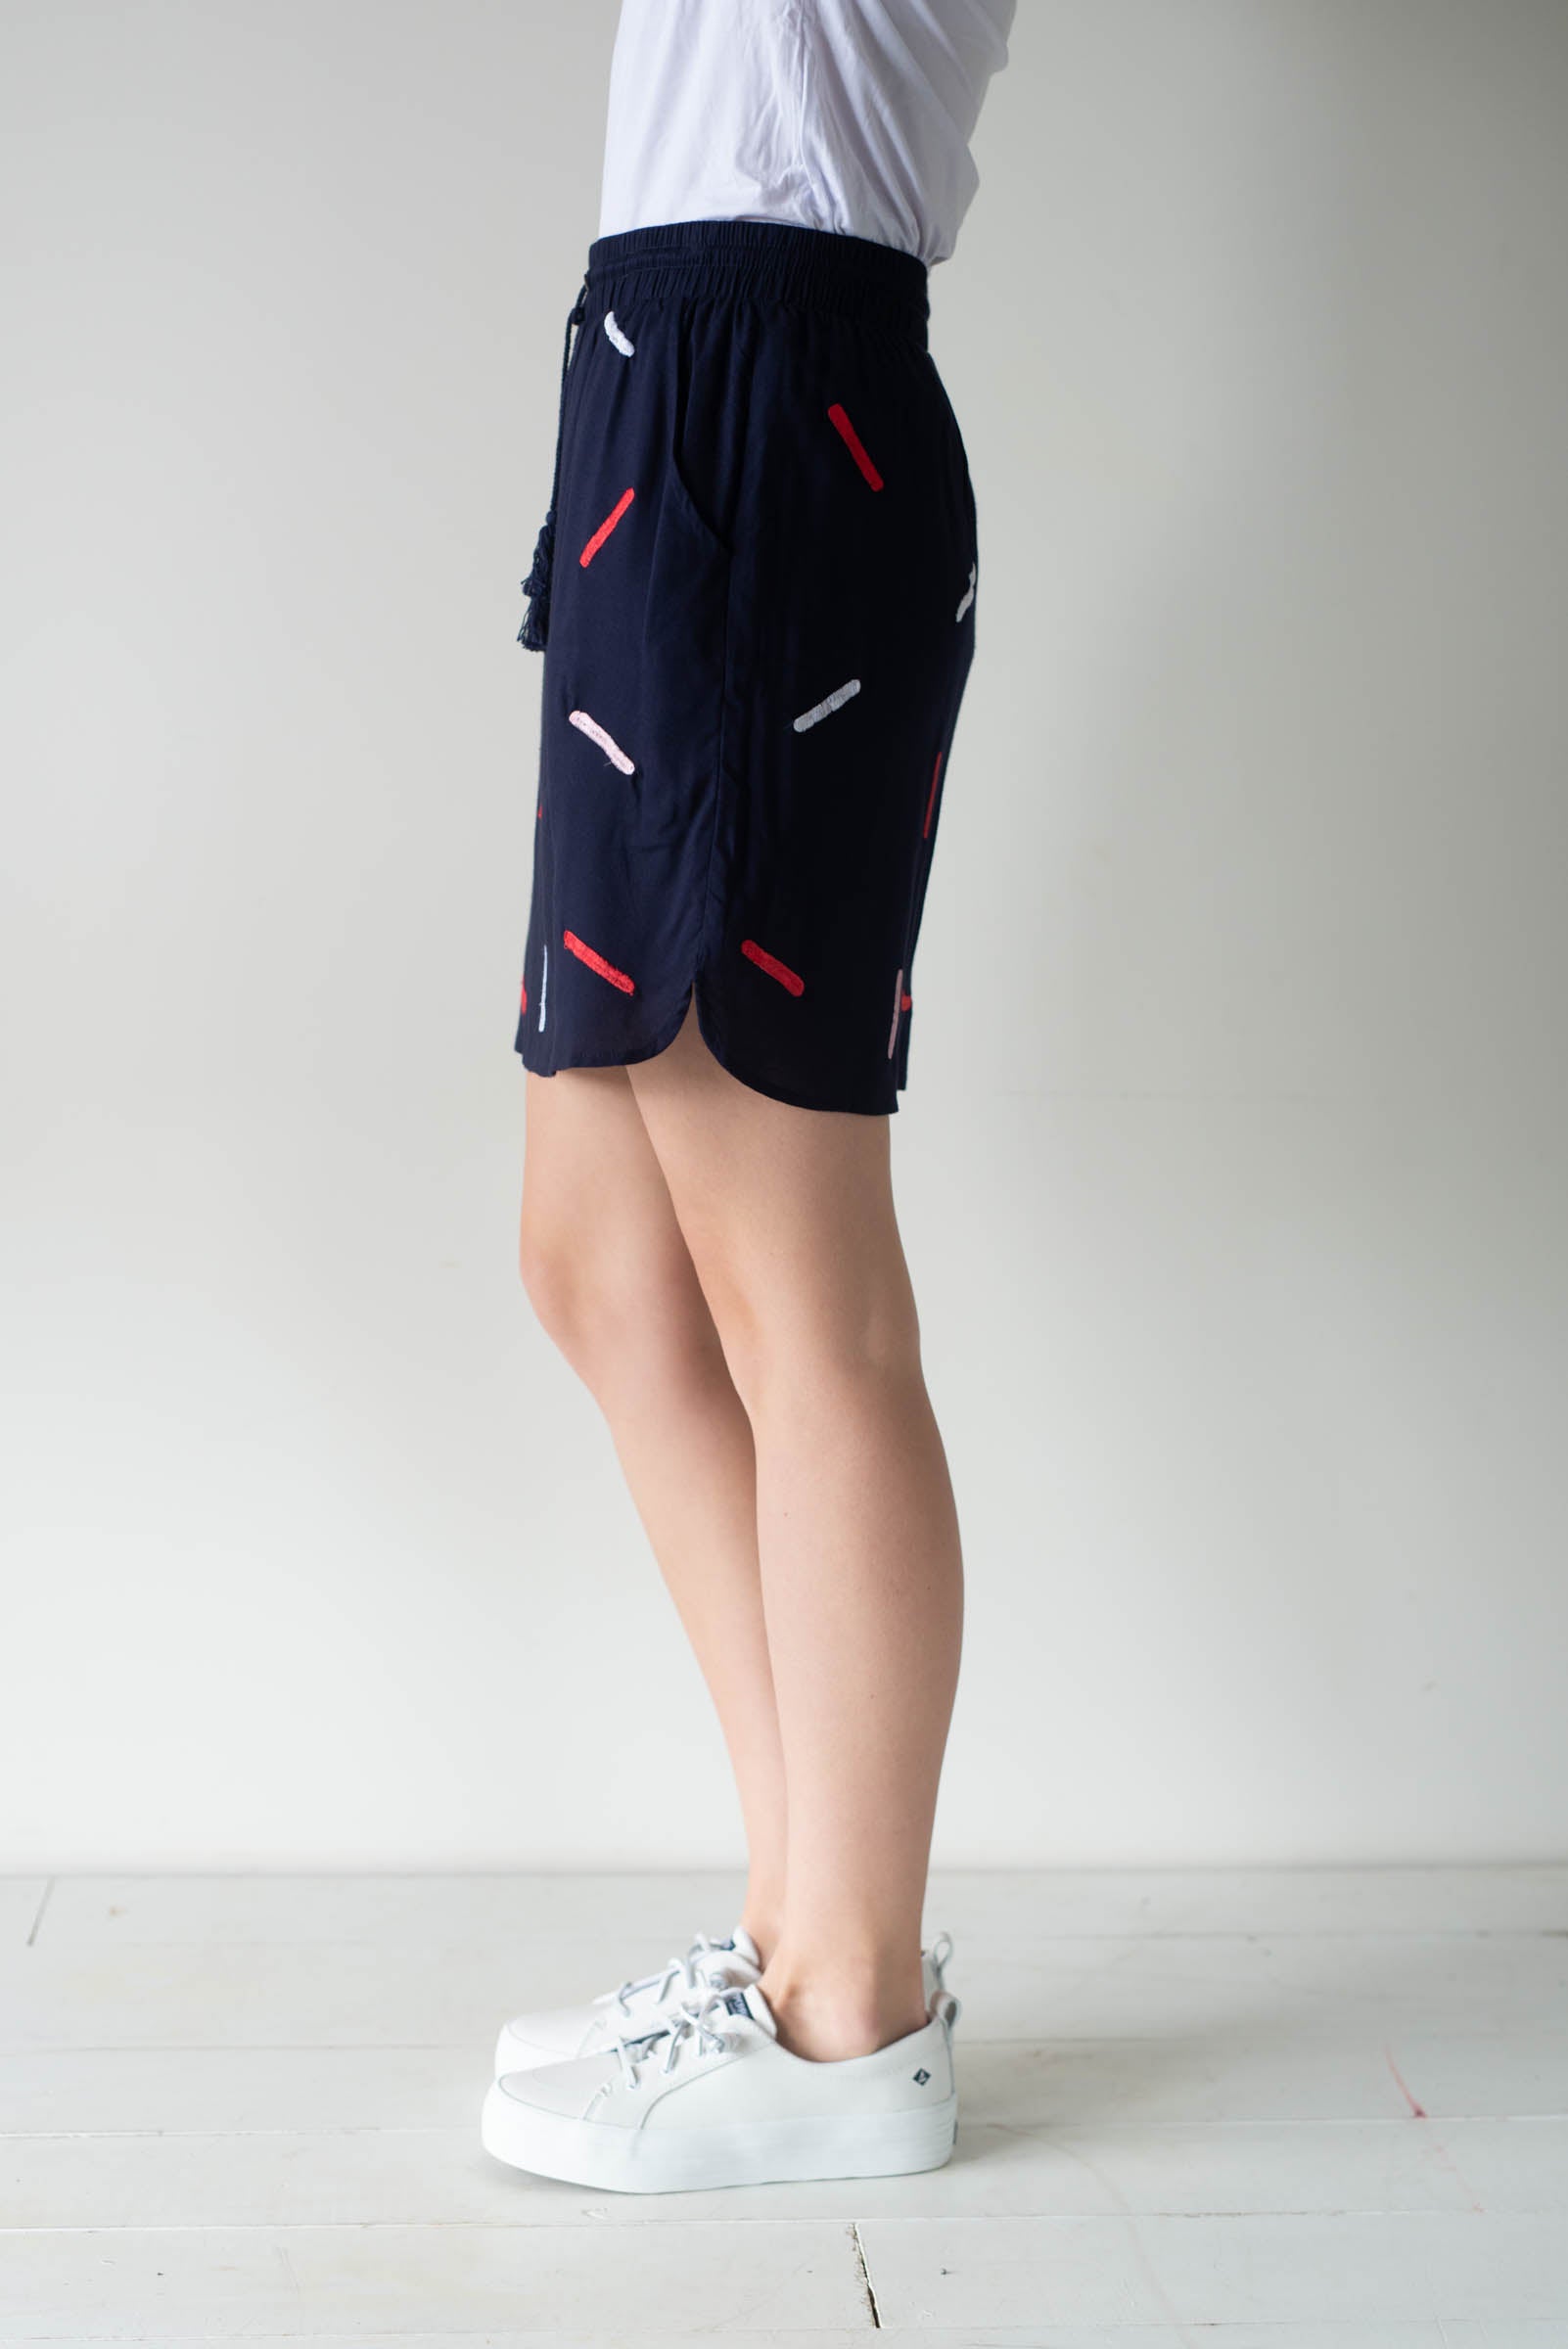 Confetti Women Skirt | Lyn Rose Boutique